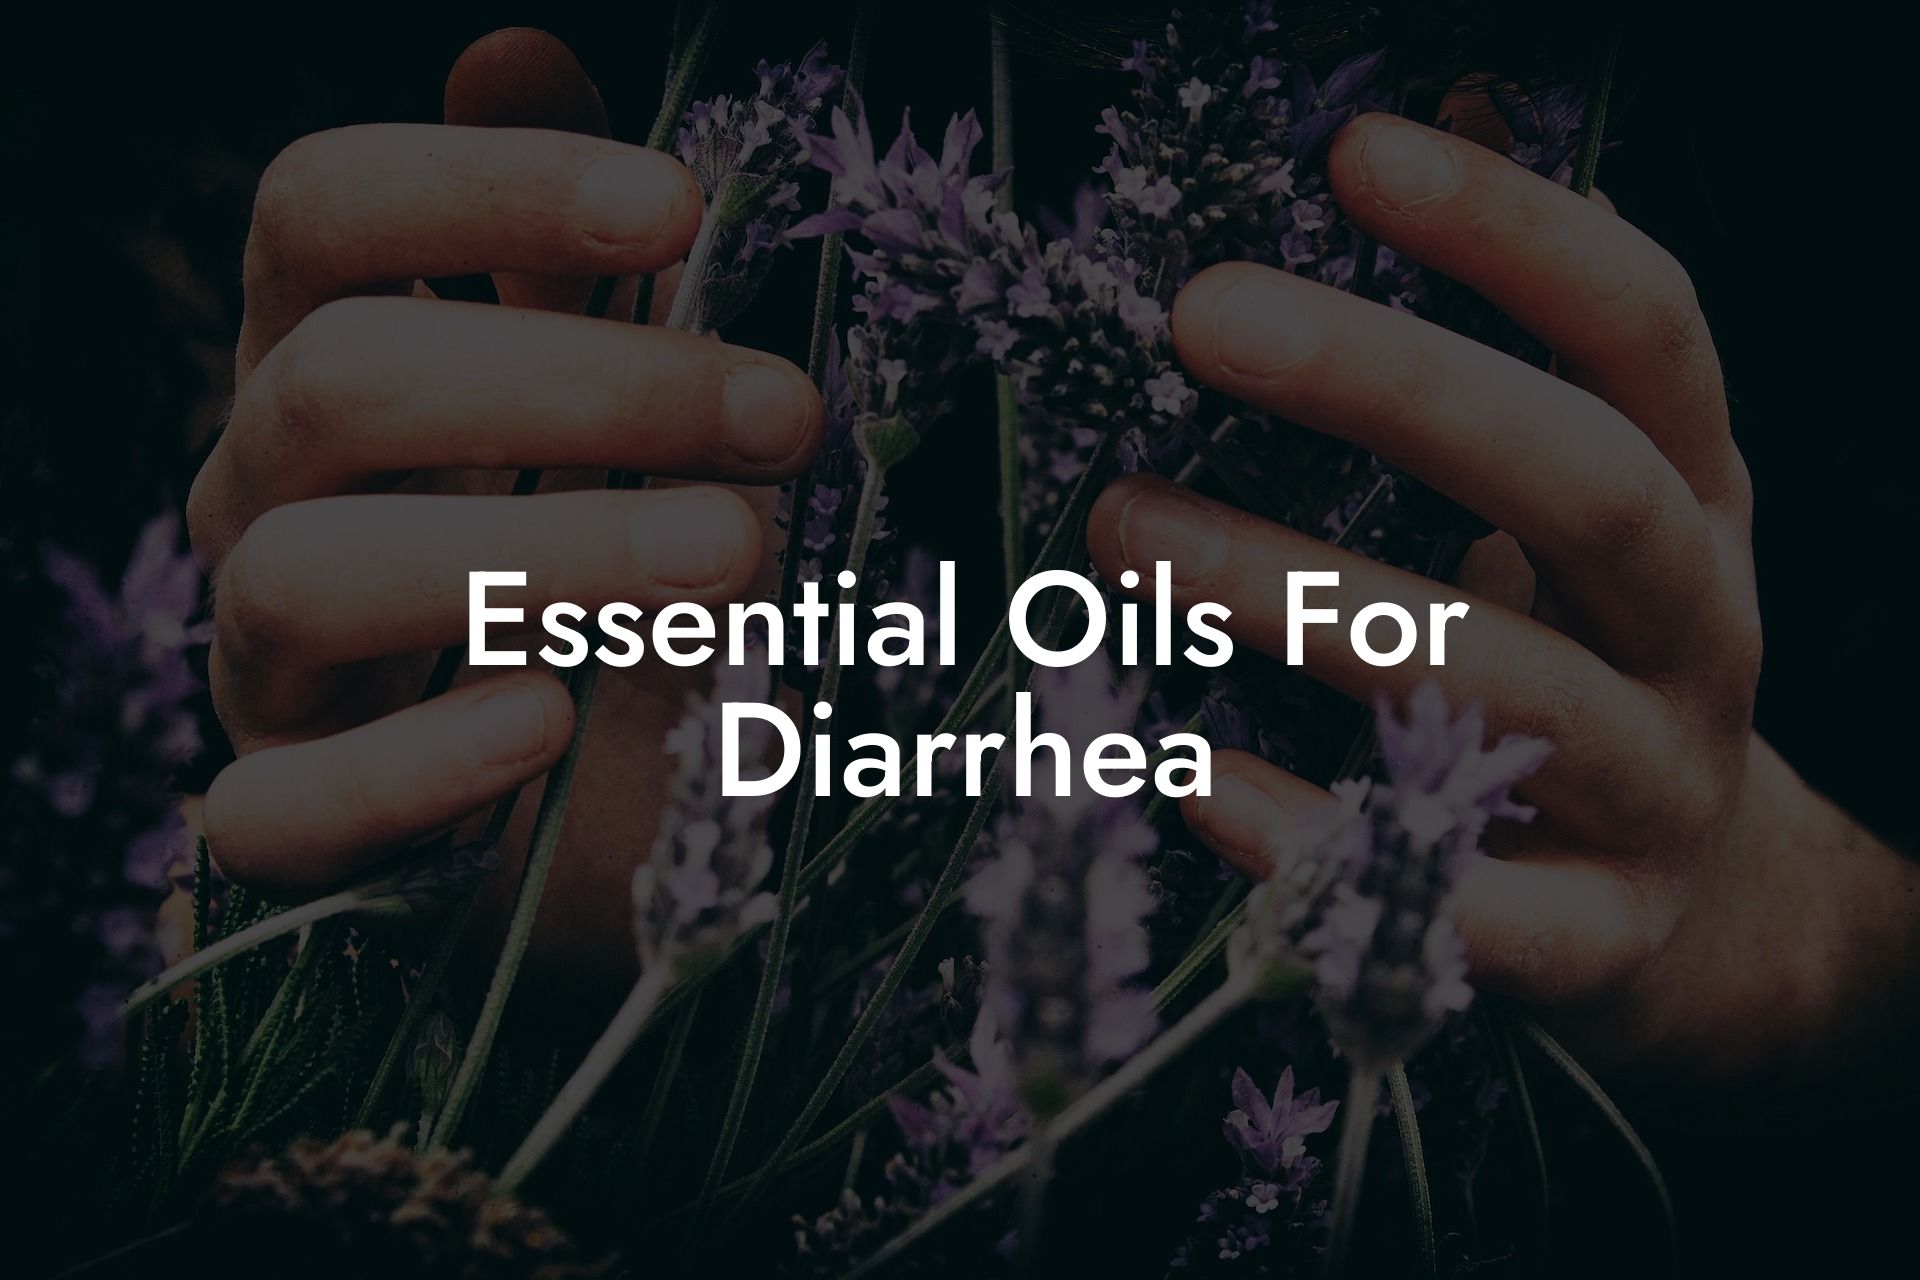 Essential Oils For Diarrhea